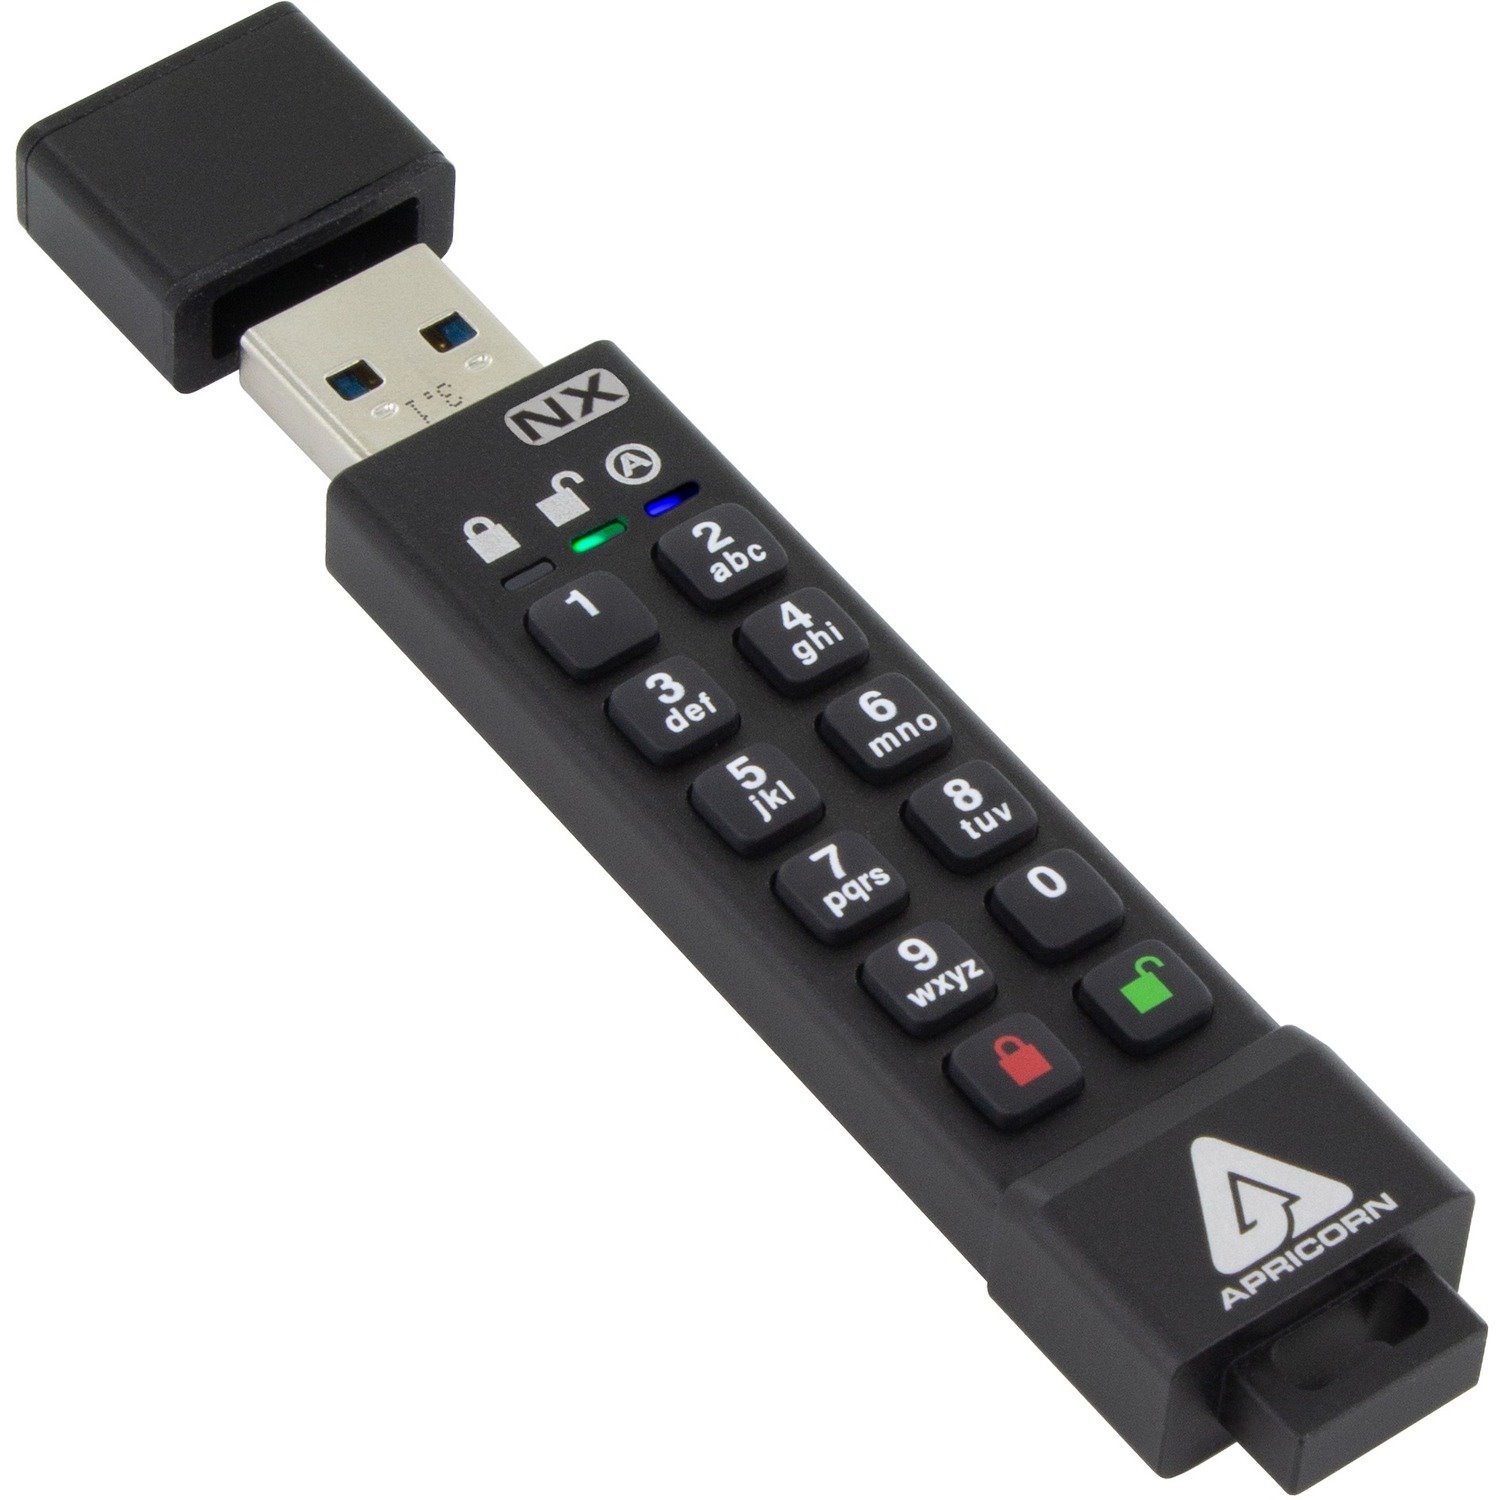 Apricorn Aegis Secure Key 3NX 8 GB USB 3.0 Flash Drive - Black - 256-bit AES